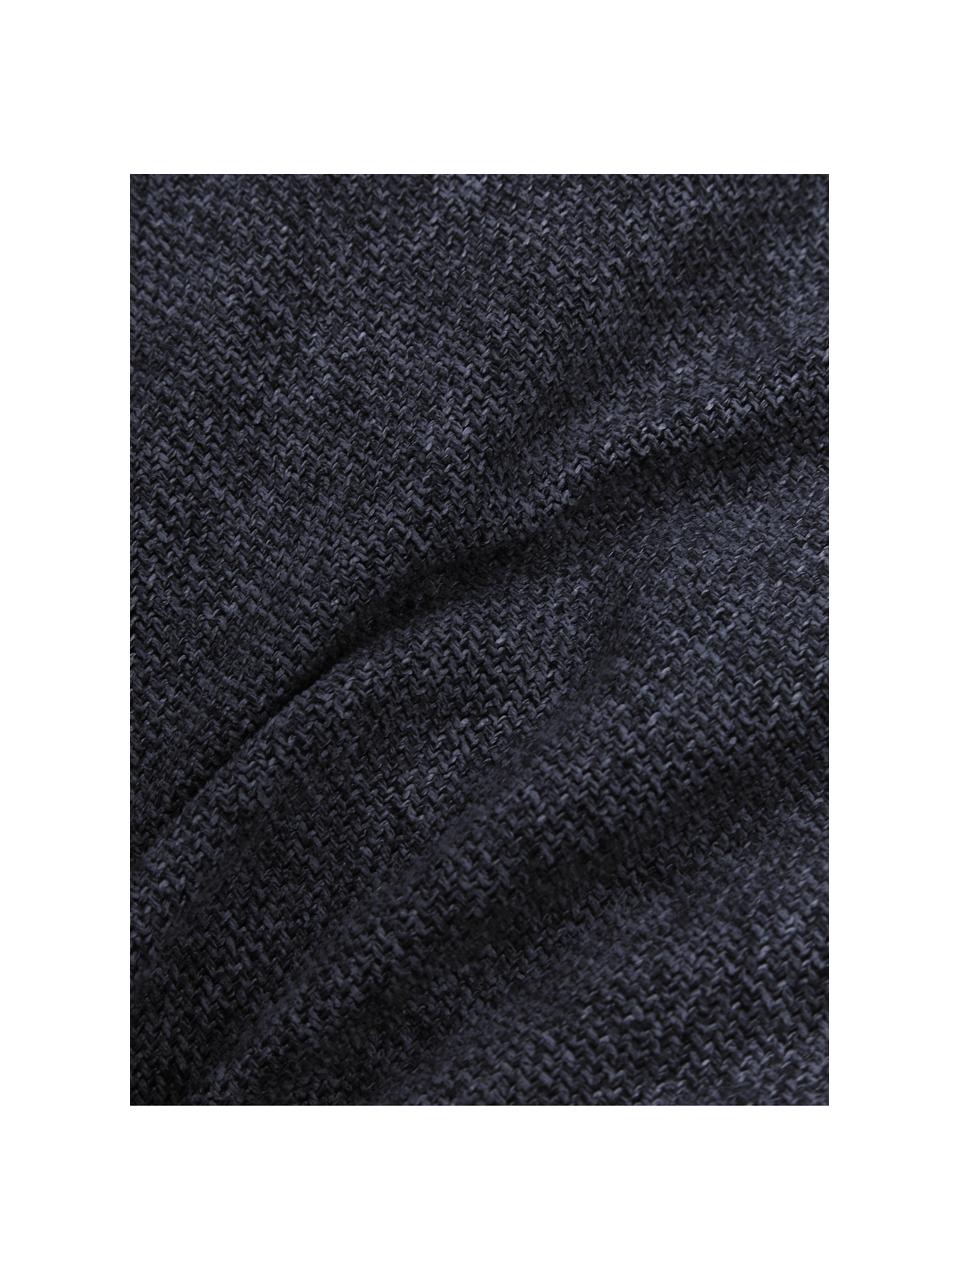 Cojín sofá Lennon, Tapizado: 100% poliéster, Tejido azul oscuro, An 60 x L 60 cm